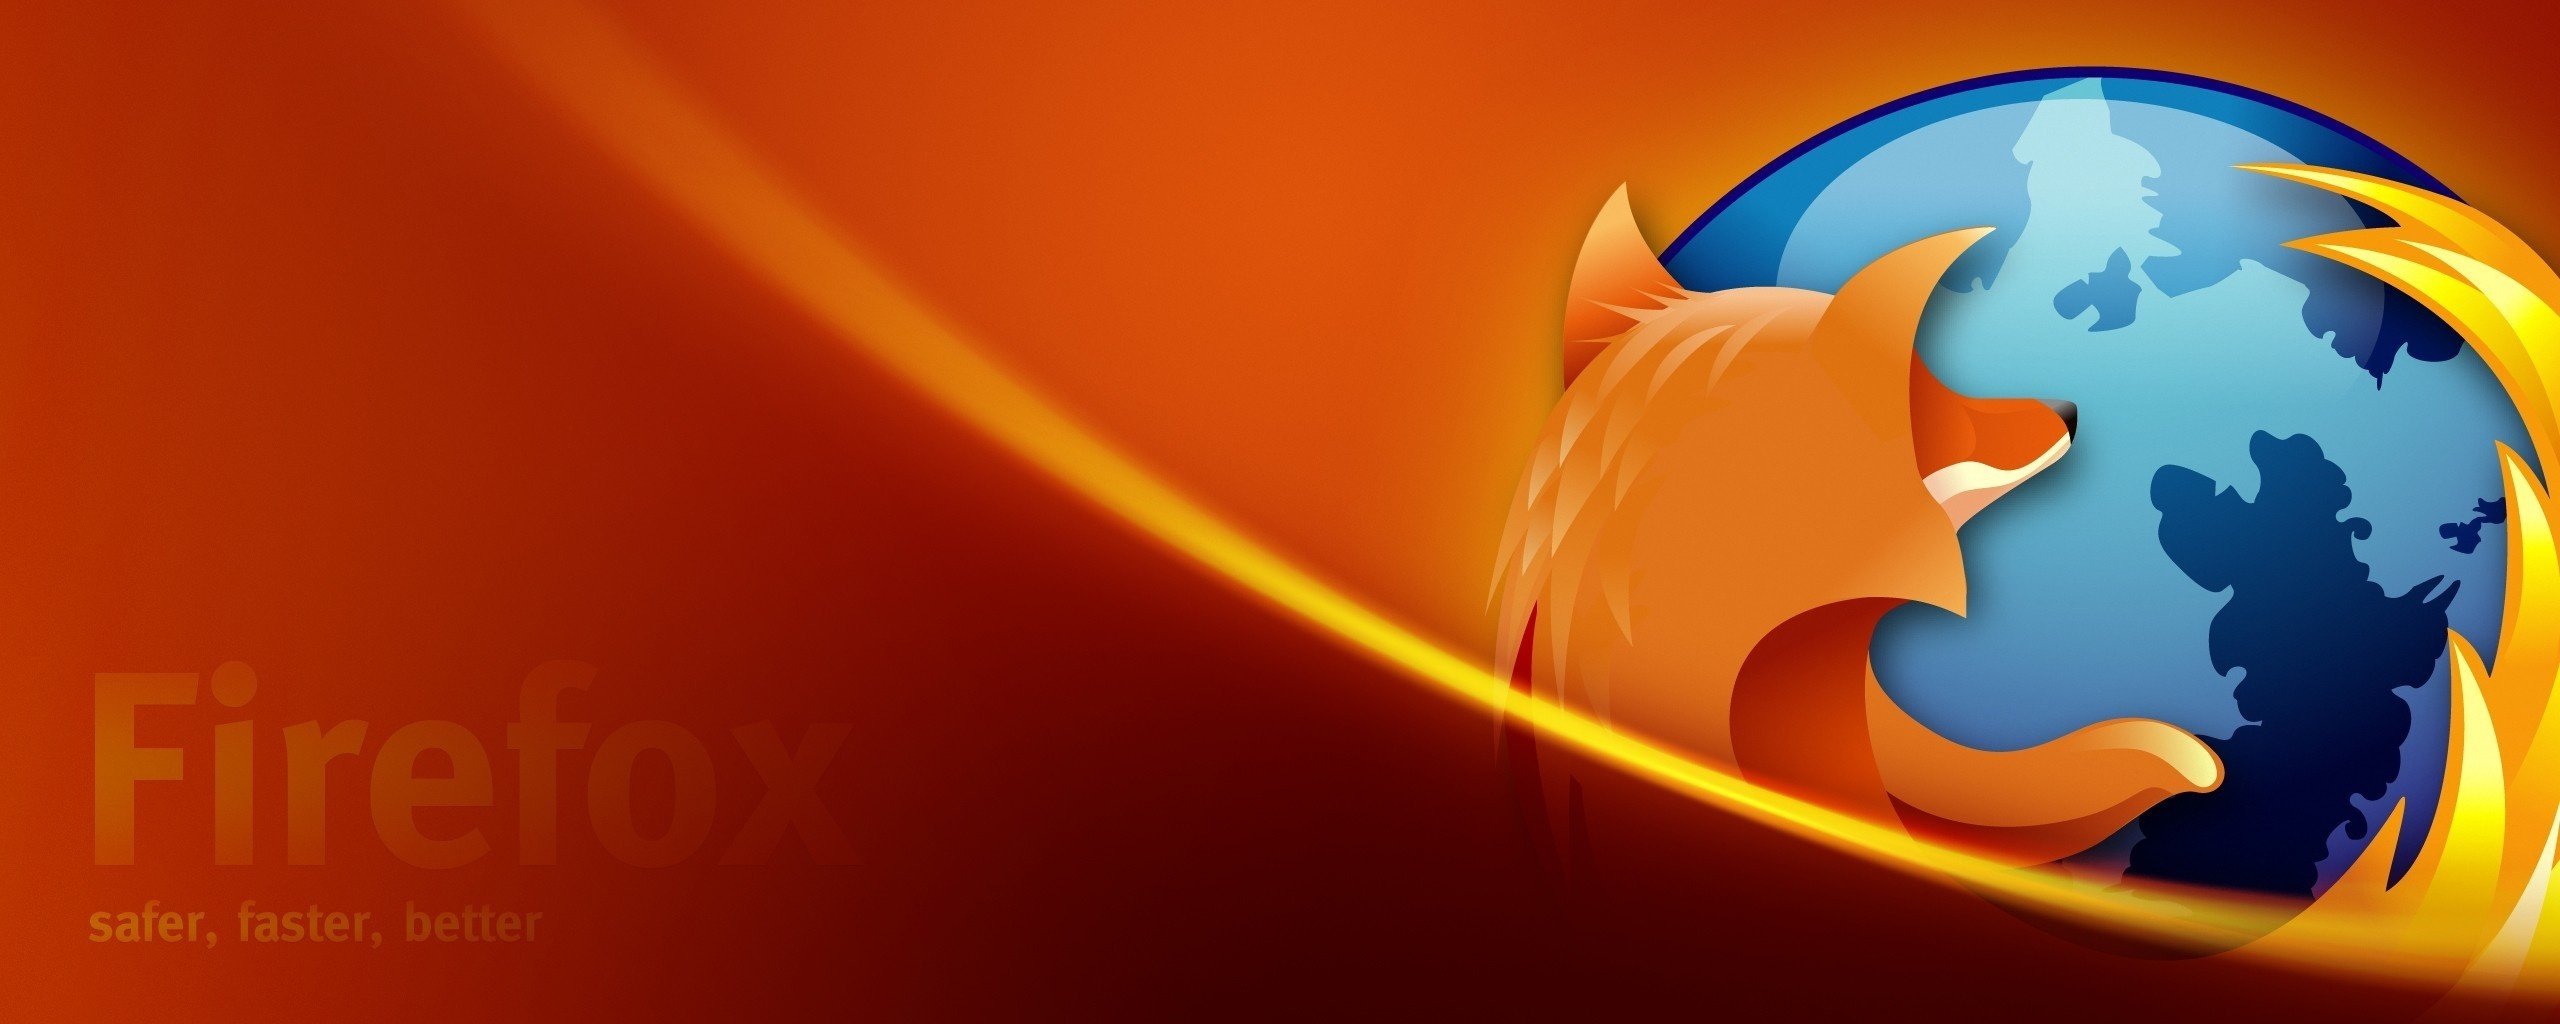 Mazilla firebox icon on an orange background